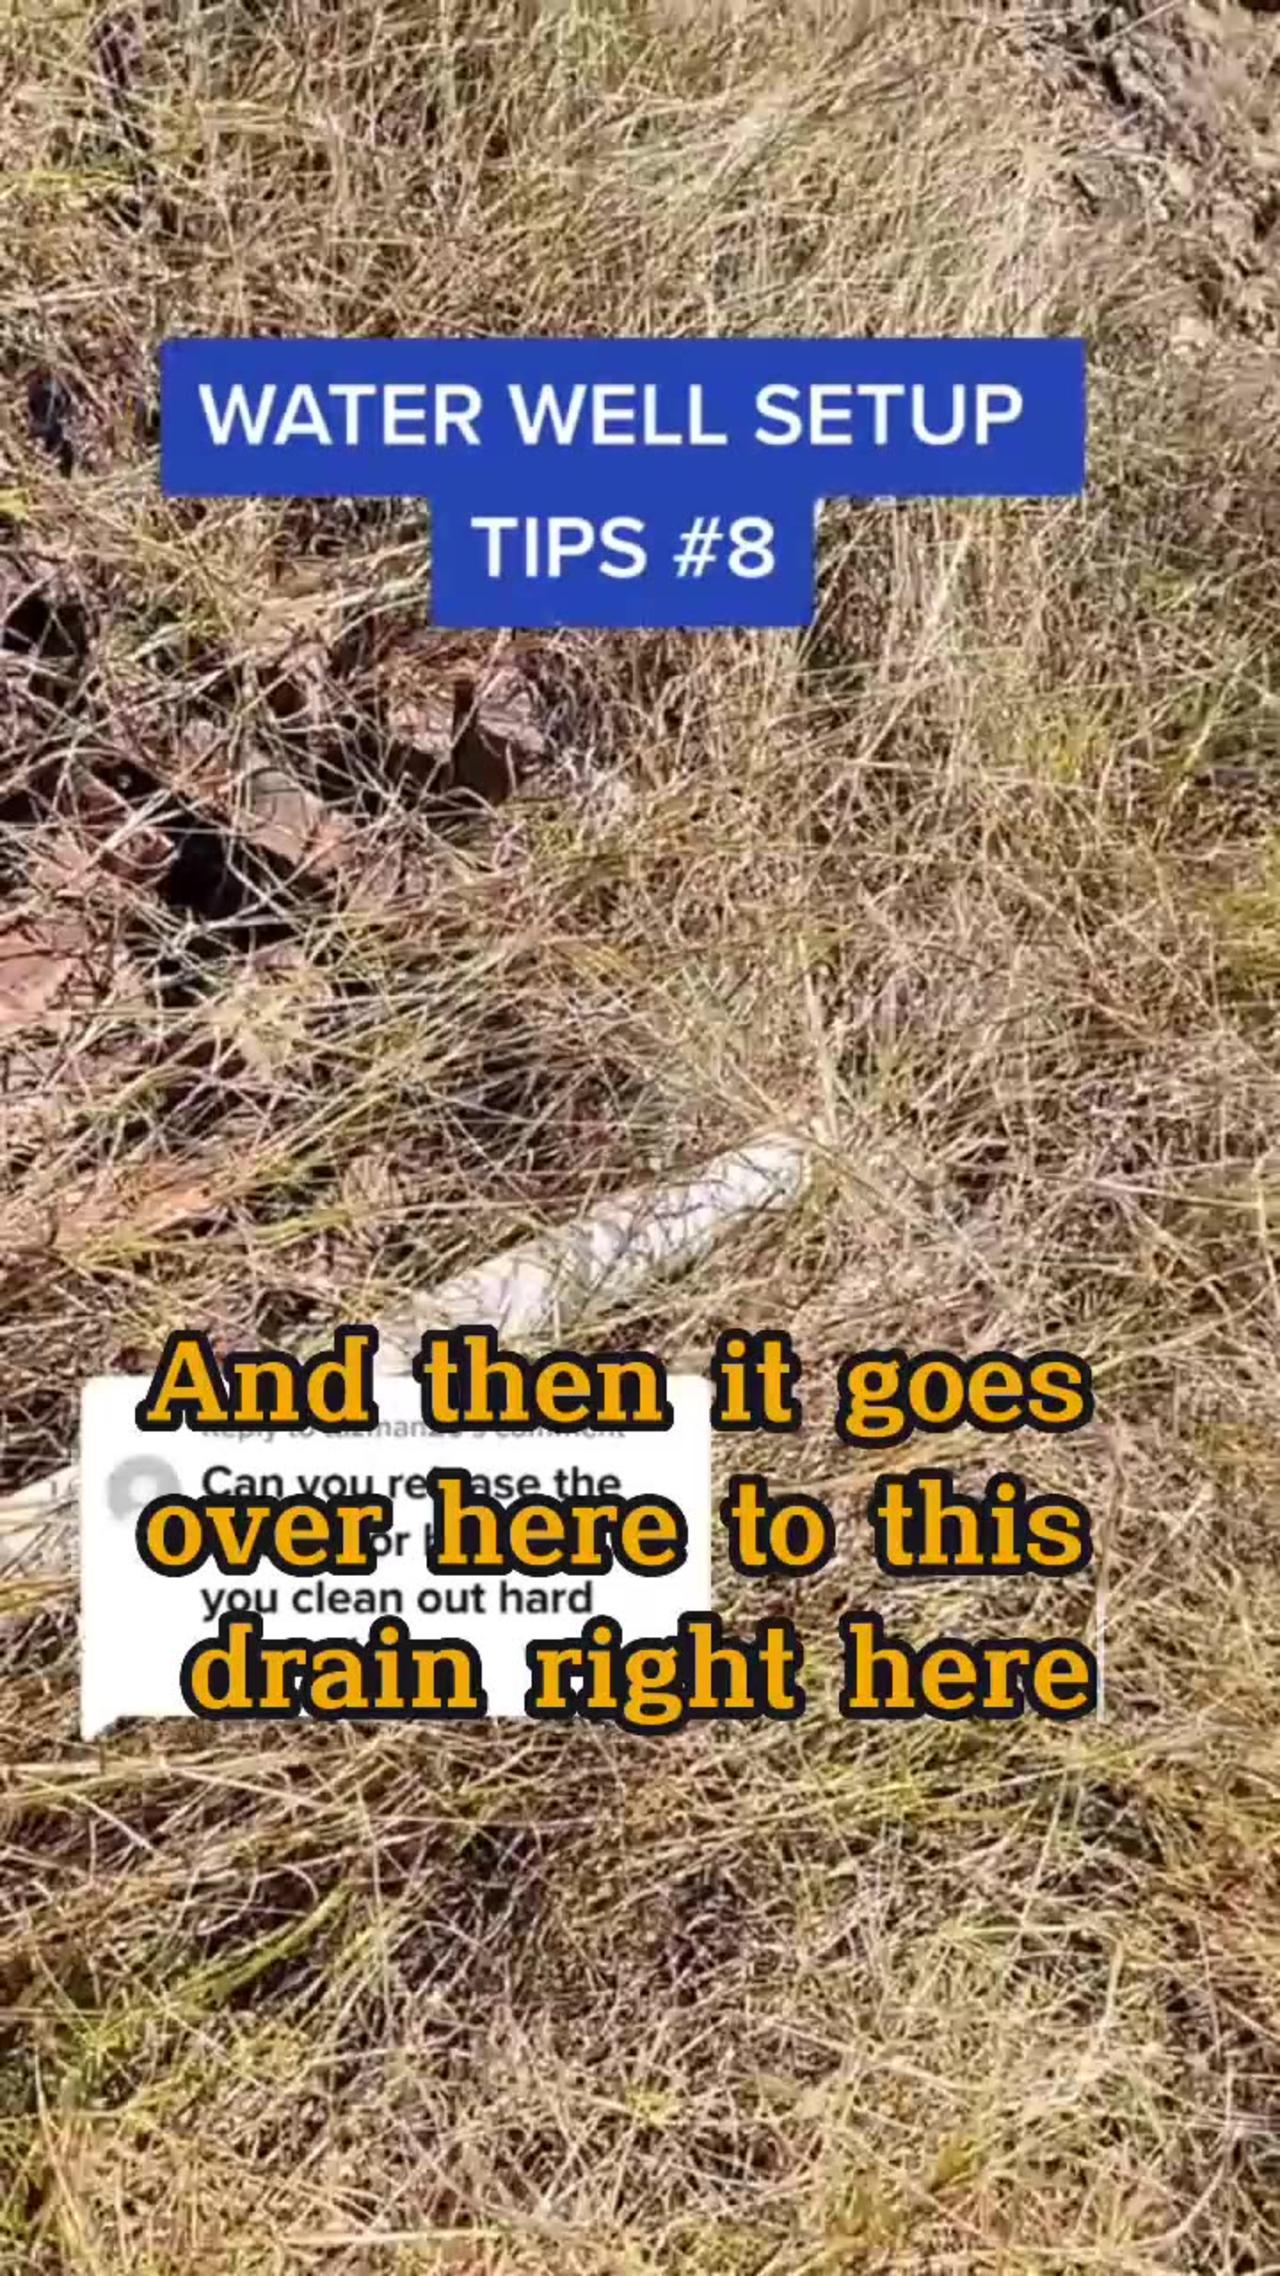 WATER WELL SETUP TIPS #8